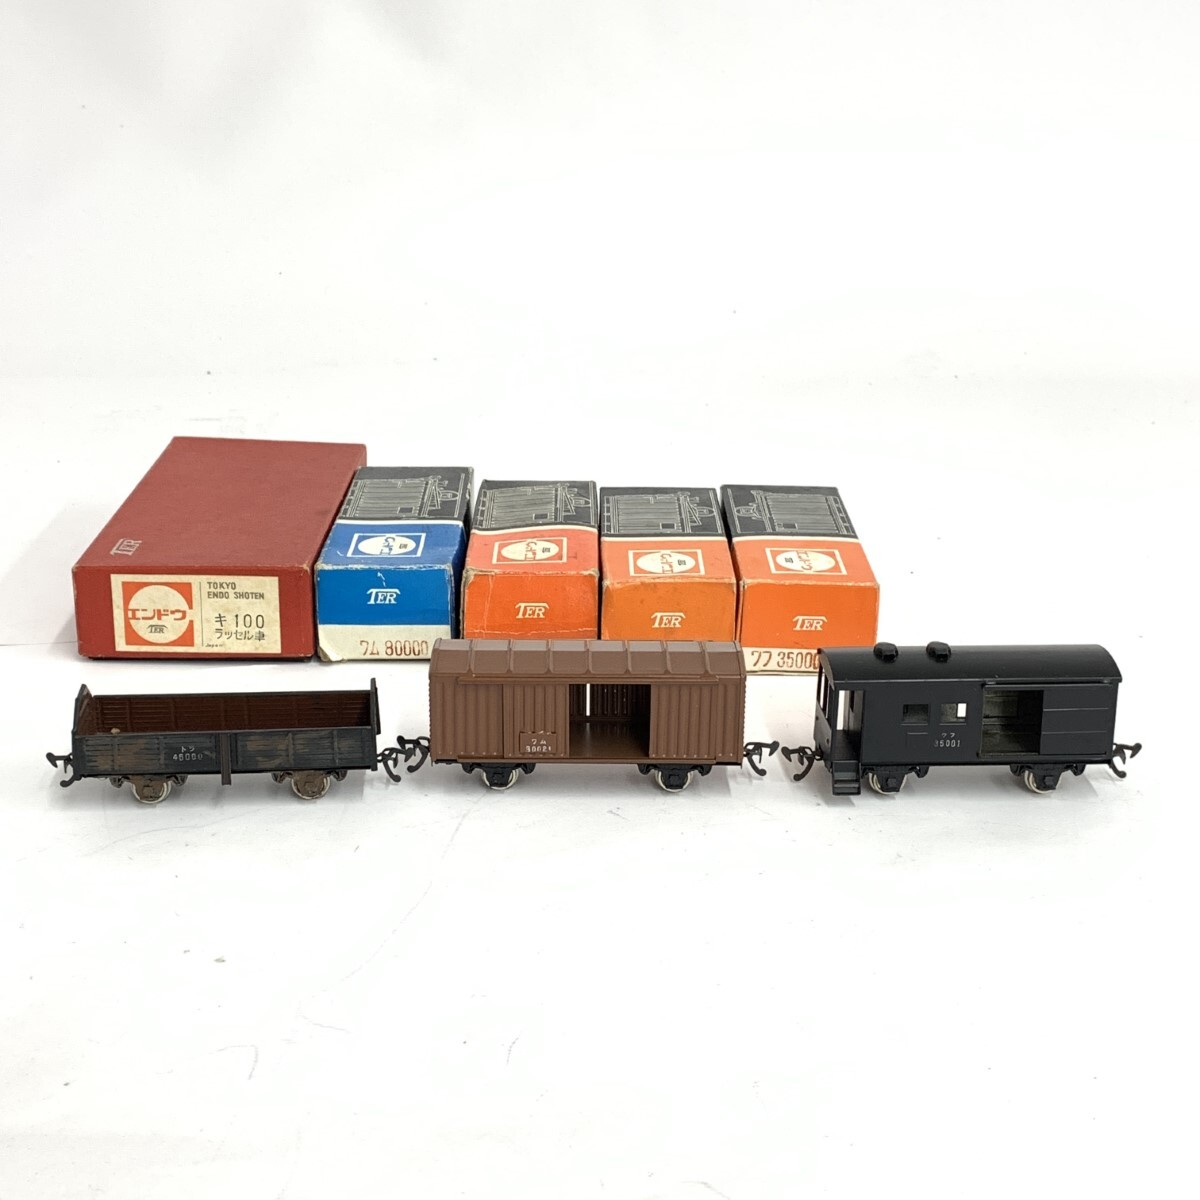  junk *TER end u russell car railroad model *ki100&wam90000/waf35000/ tiger 45000/wam80000 black collection hobby train 